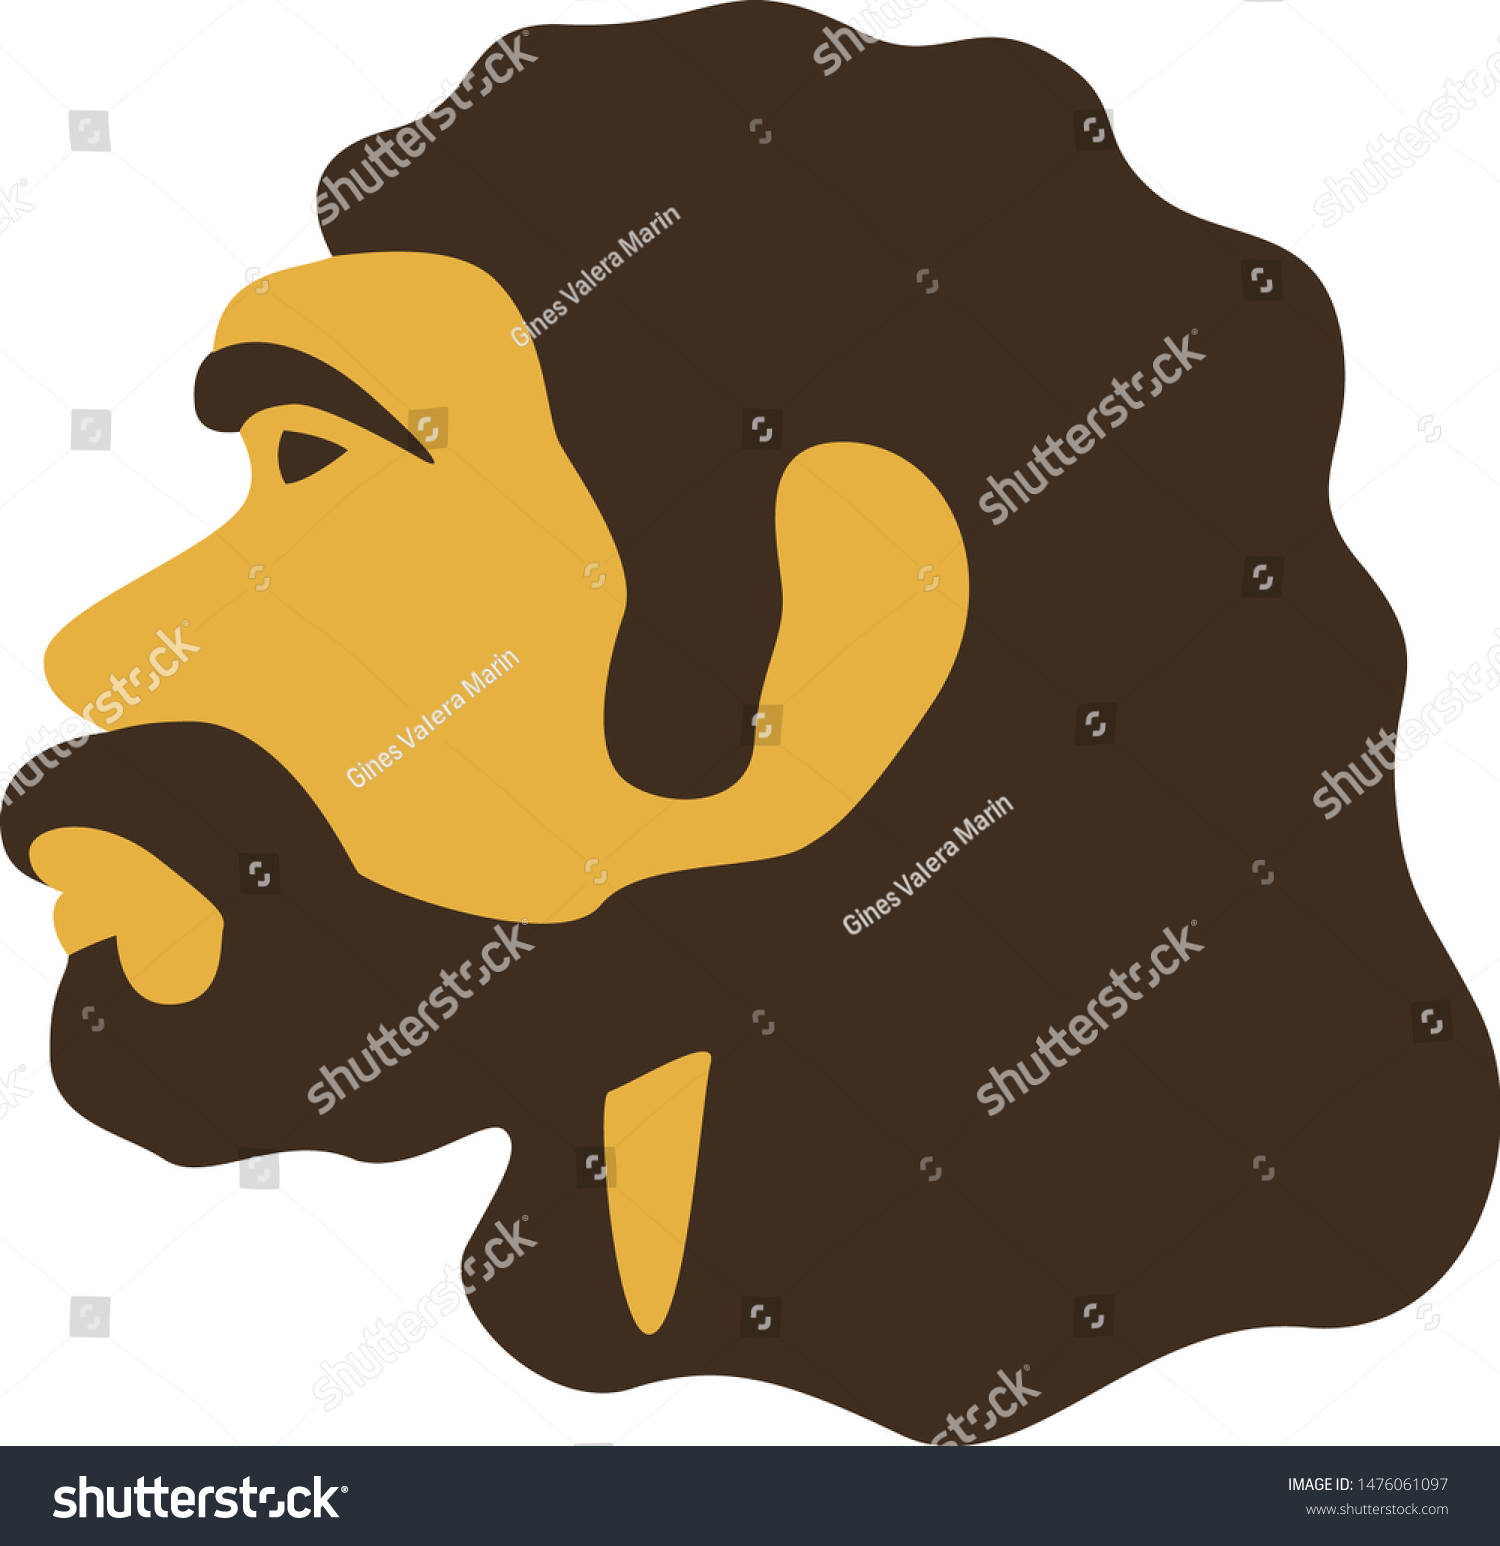 SVG of Vector illustration. Simple caveman head icon. Neardenthal or cro-magnon prehistoric man. svg